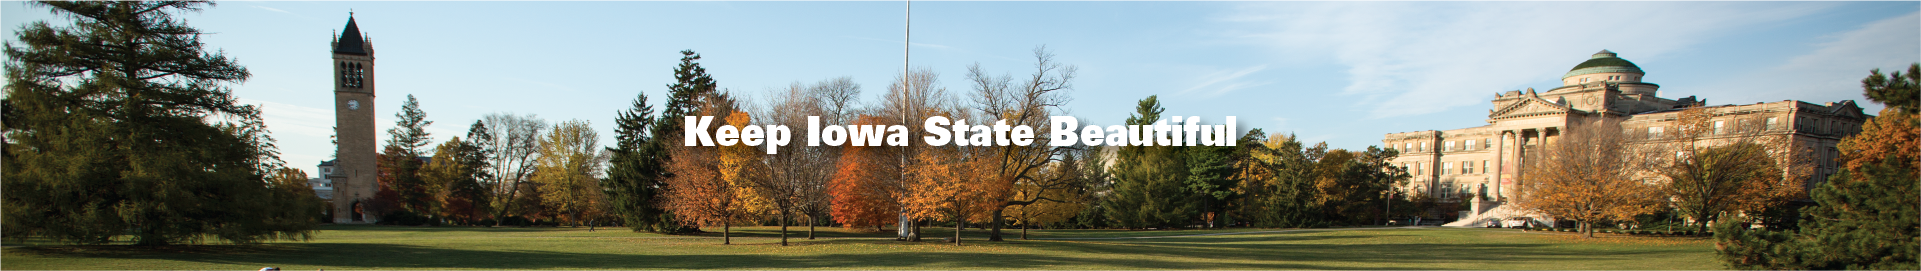 Keep Iowa State Beautiful